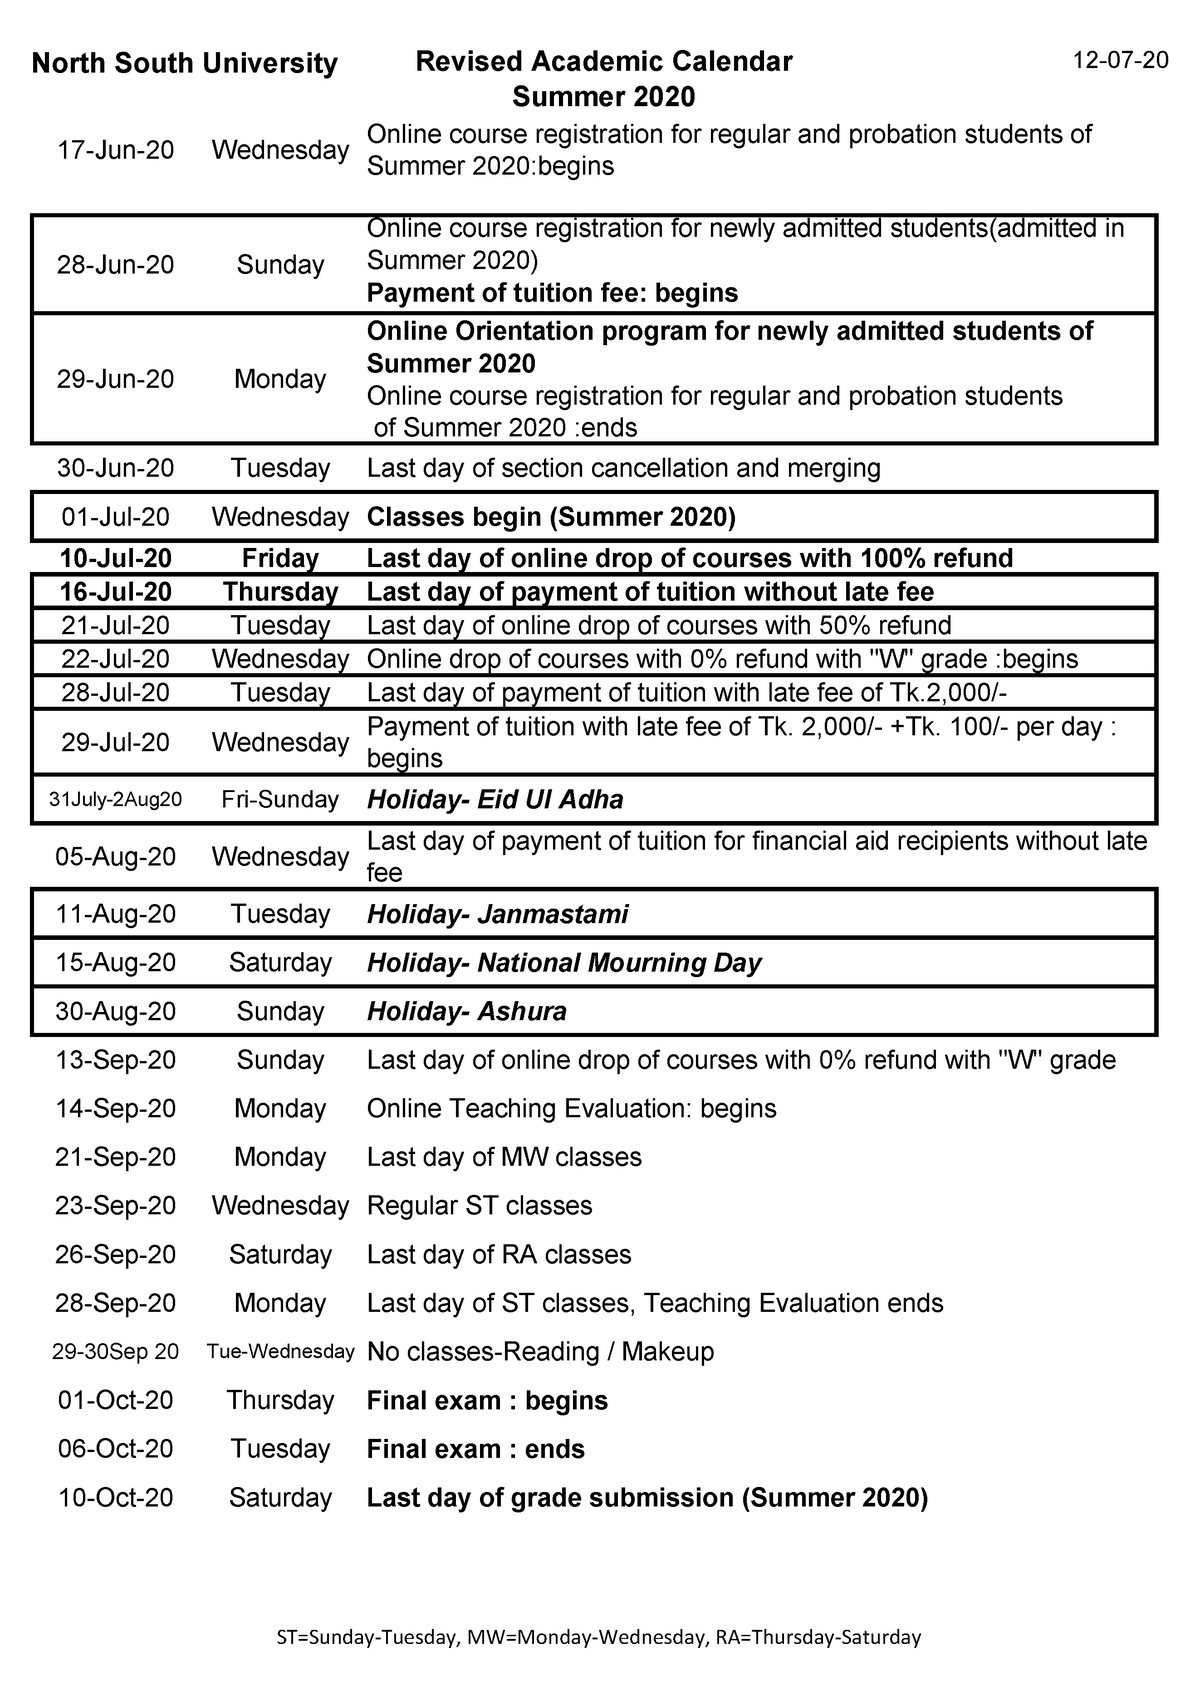 Academic Calendar Summer 2020 Revised 12072020 North South University